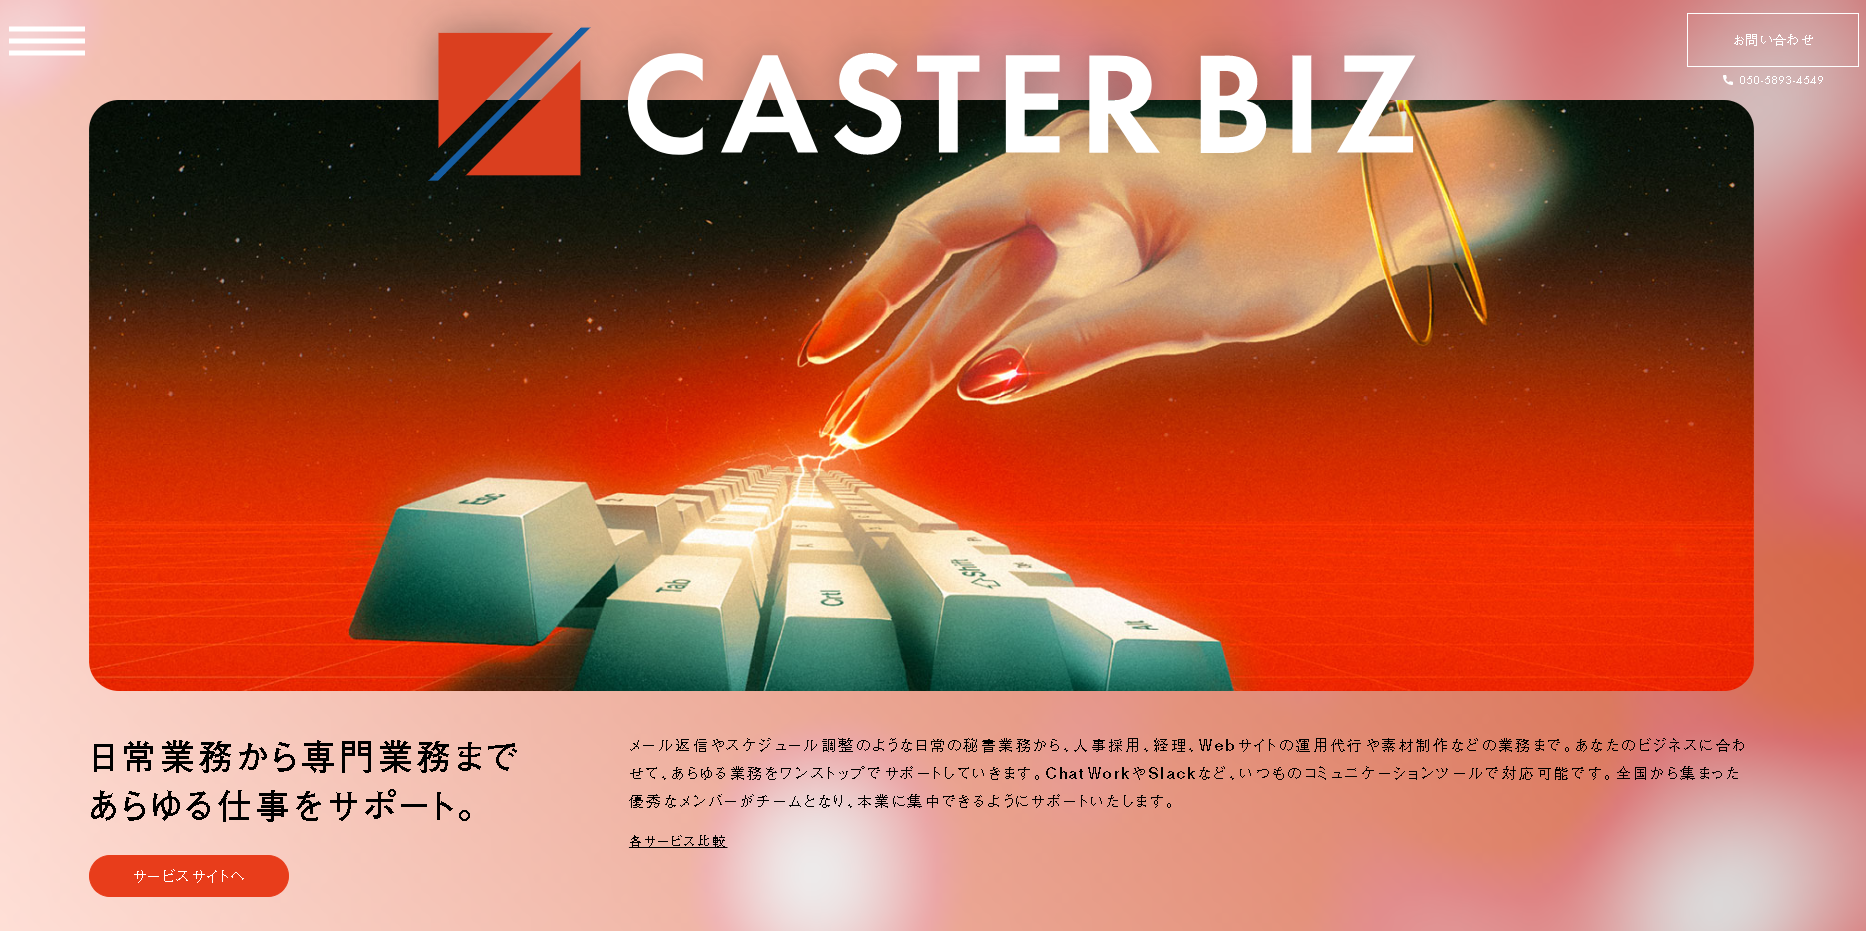 『CASTER BIZ』株式会社キャスター